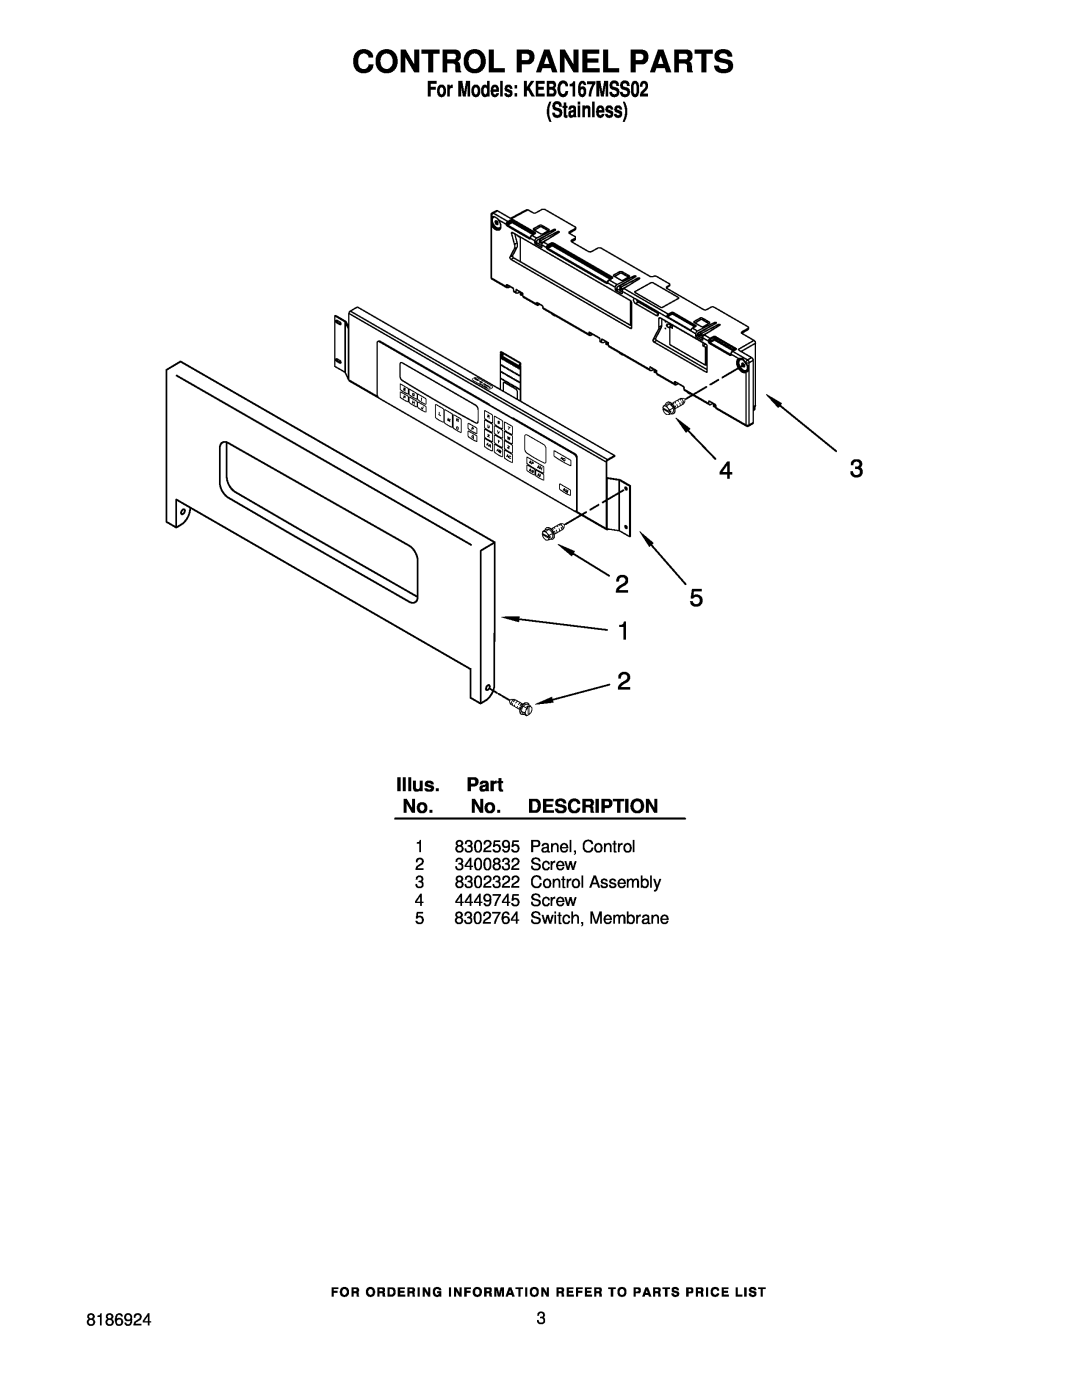 KitchenAid manual Control Panel Parts, Illus. Part No. No. DESCRIPTION, For Models KEBC167MSS02 Stainless 